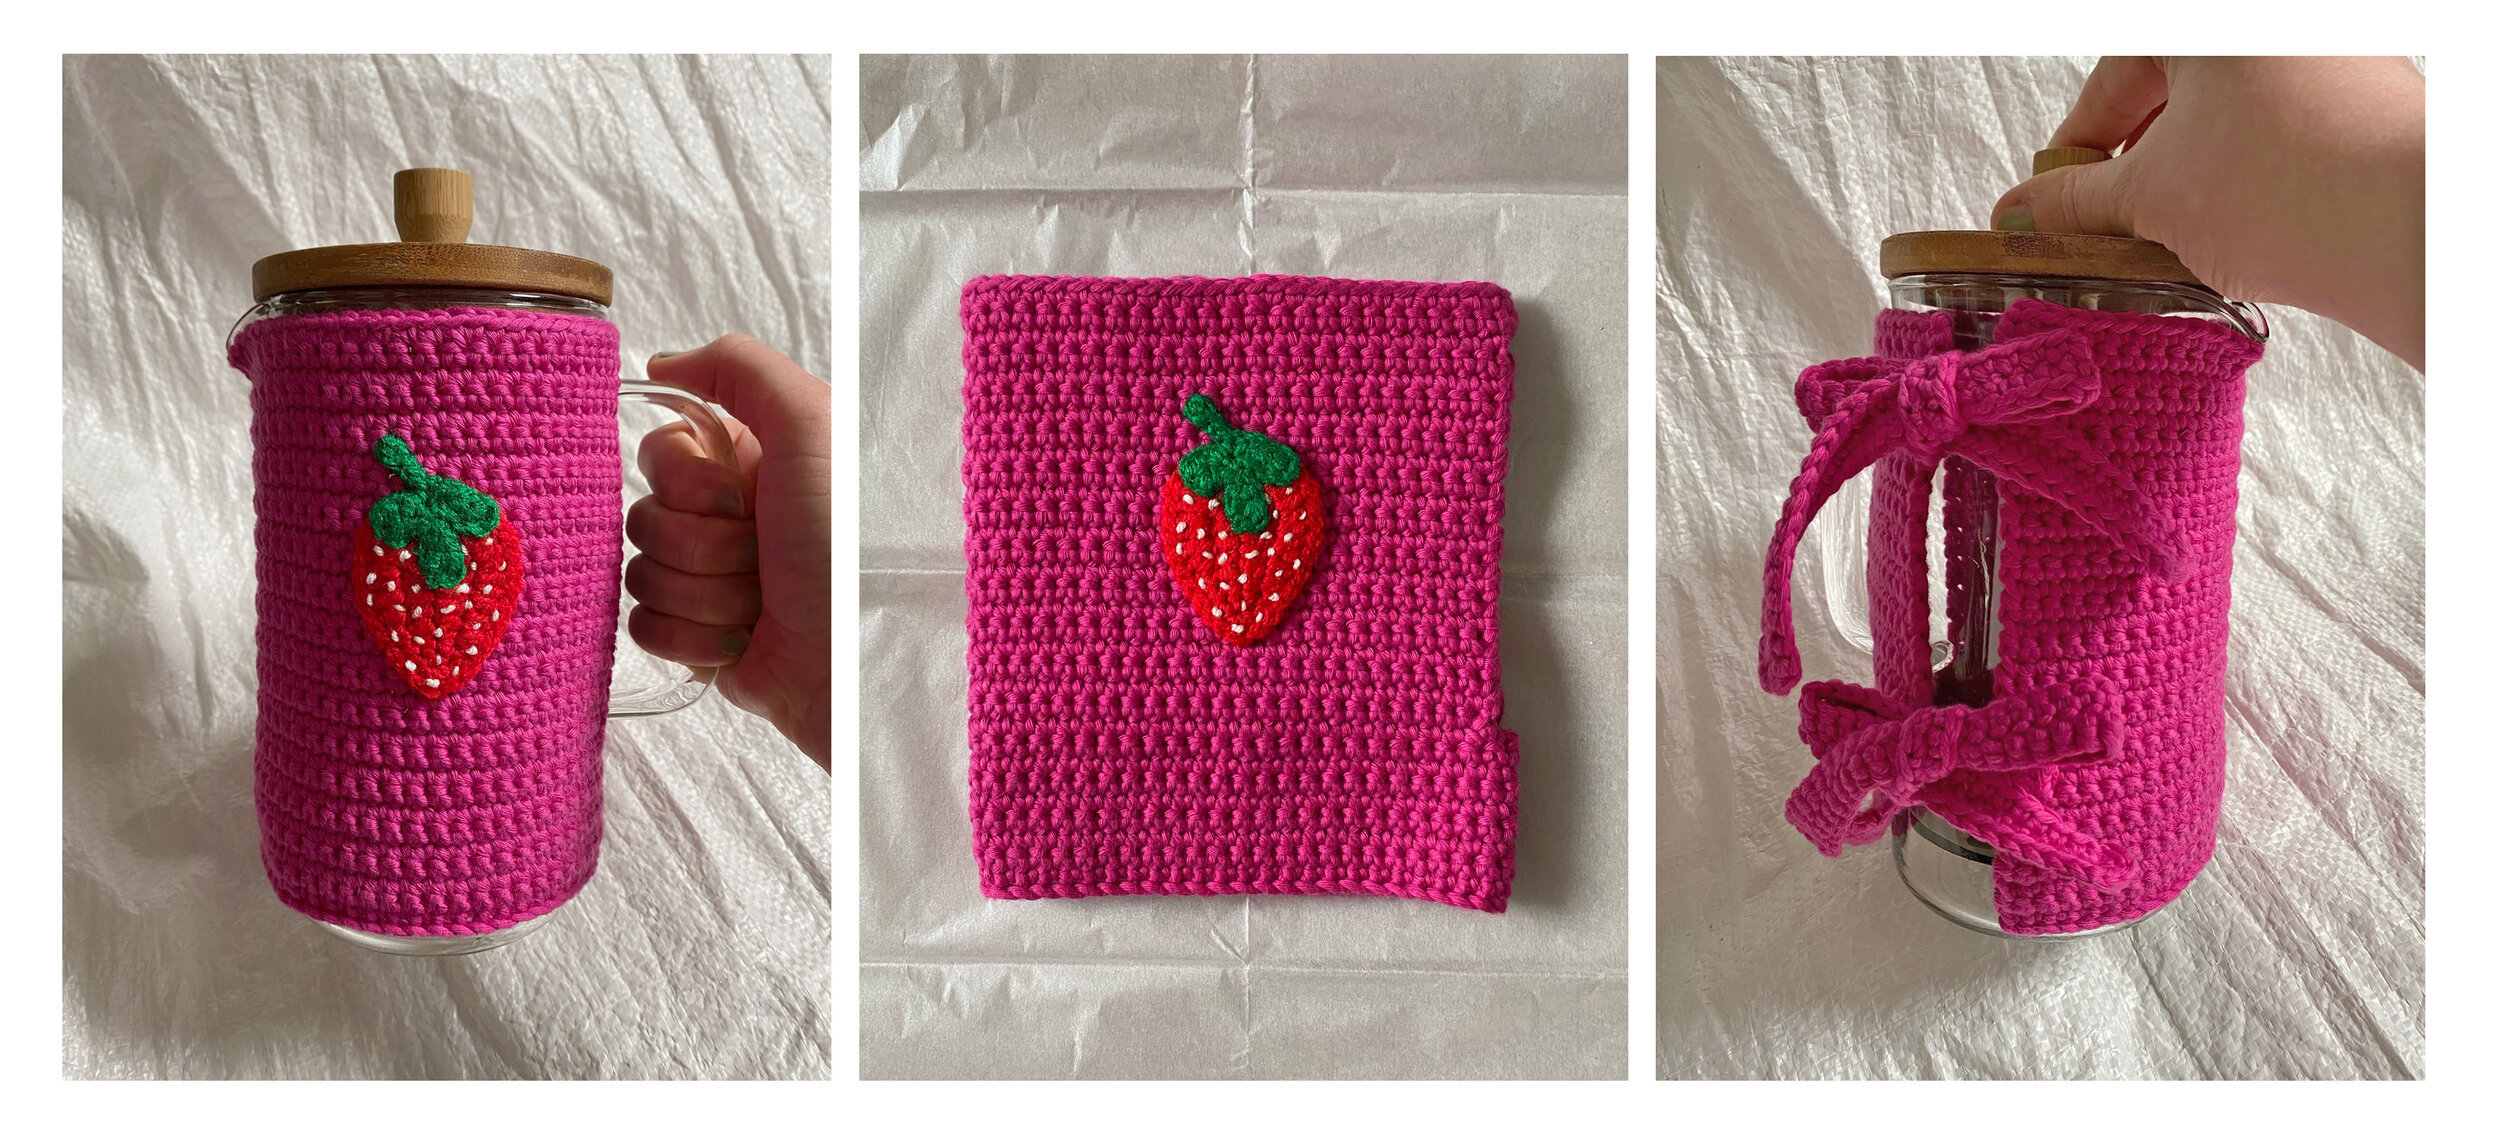  Crochet cafetière cosy with strawberry appliqué design    